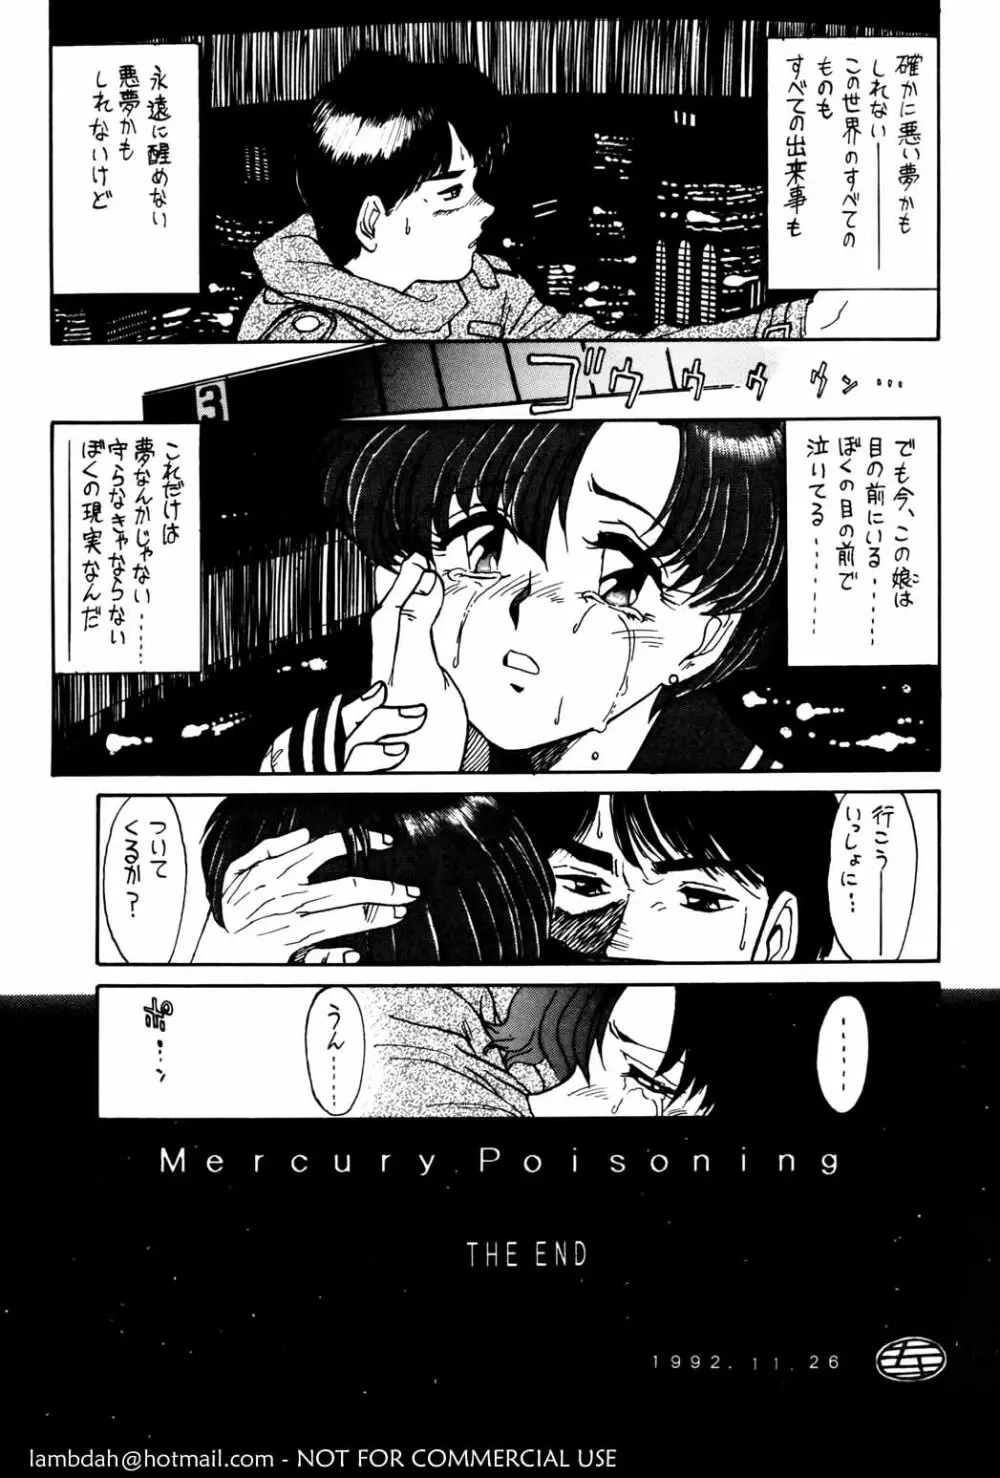 Mercury Poisoning 27ページ